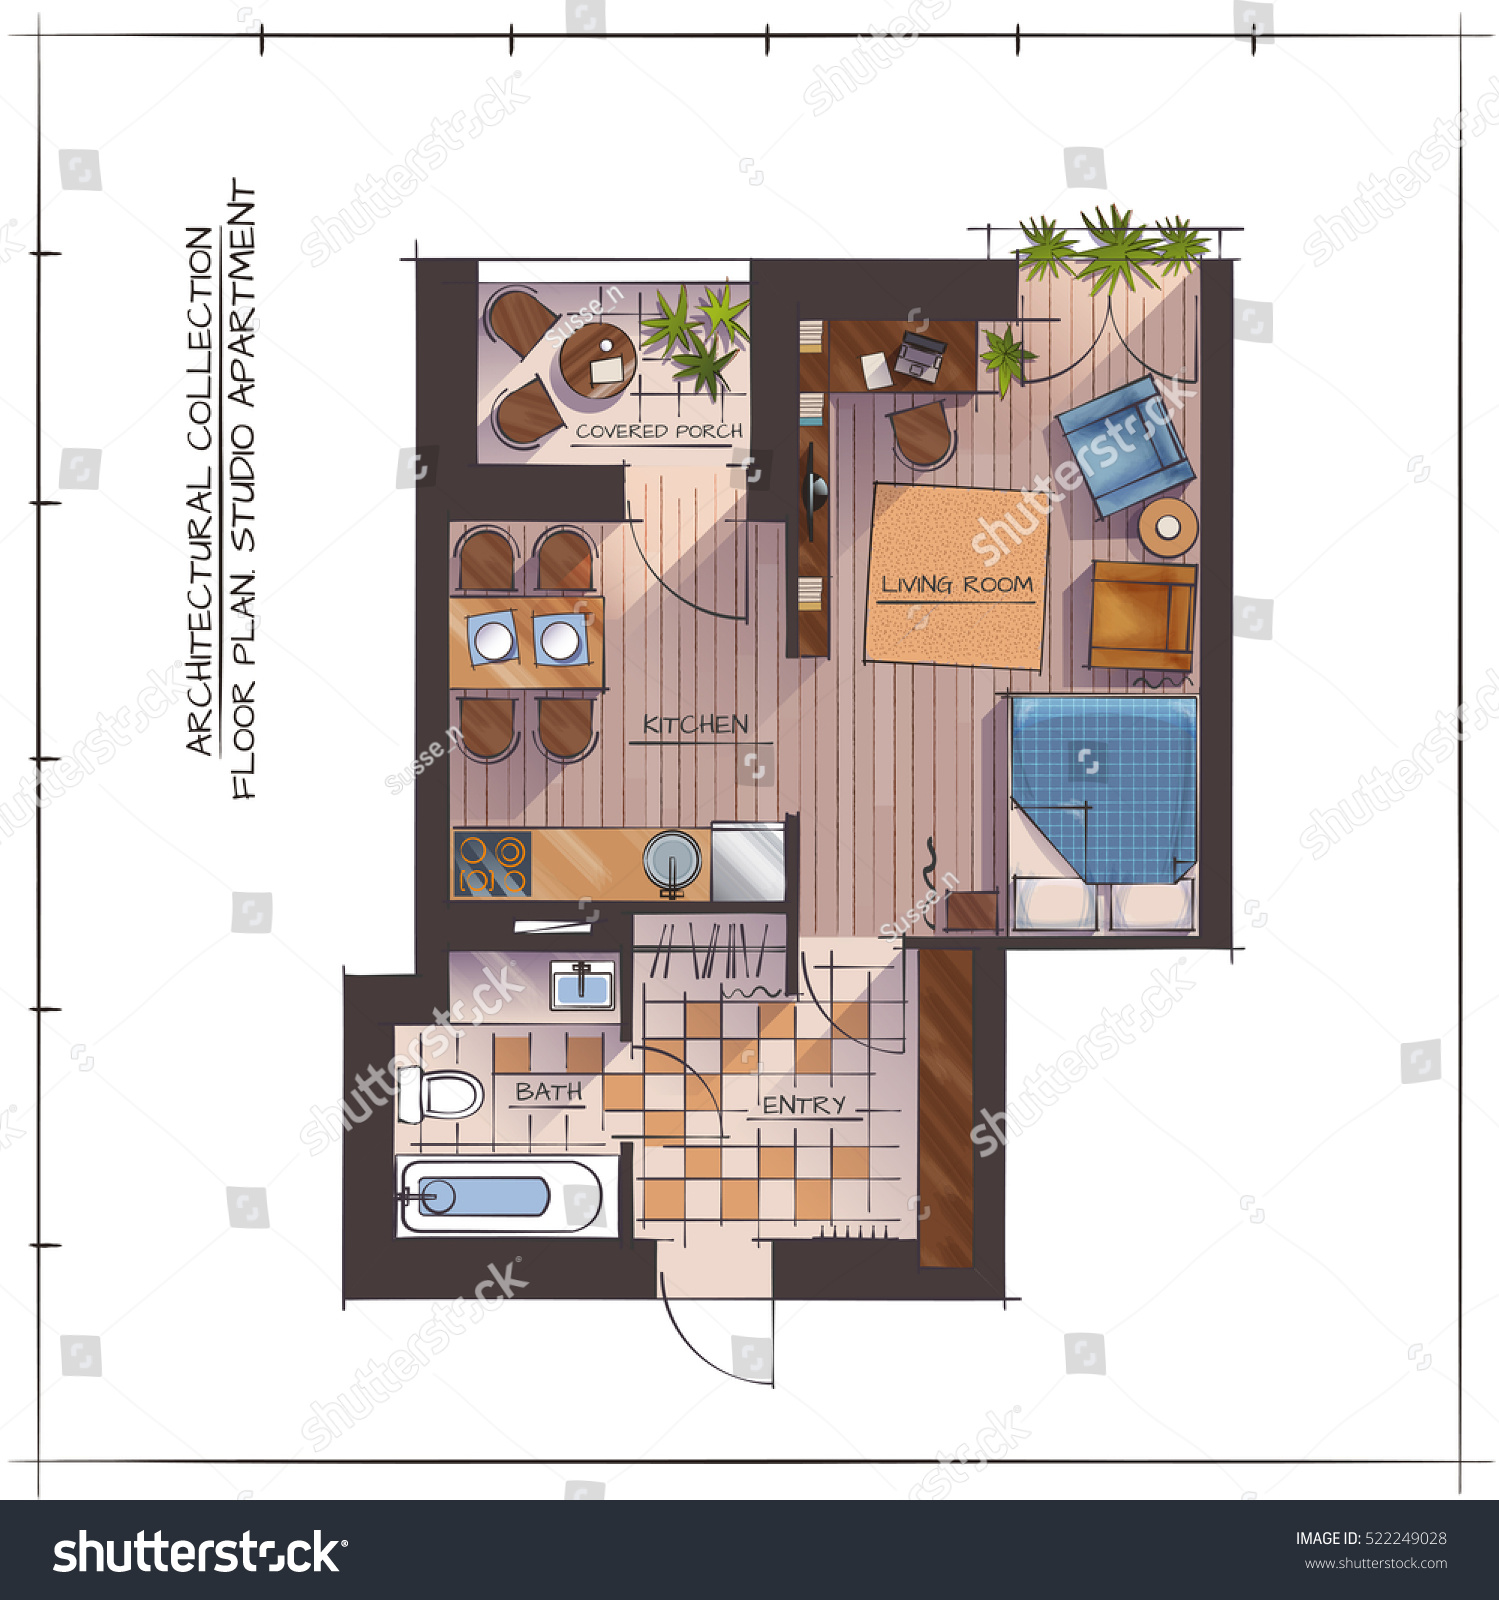 Architectural Color Floor Plan One Bedroom Stock Vector